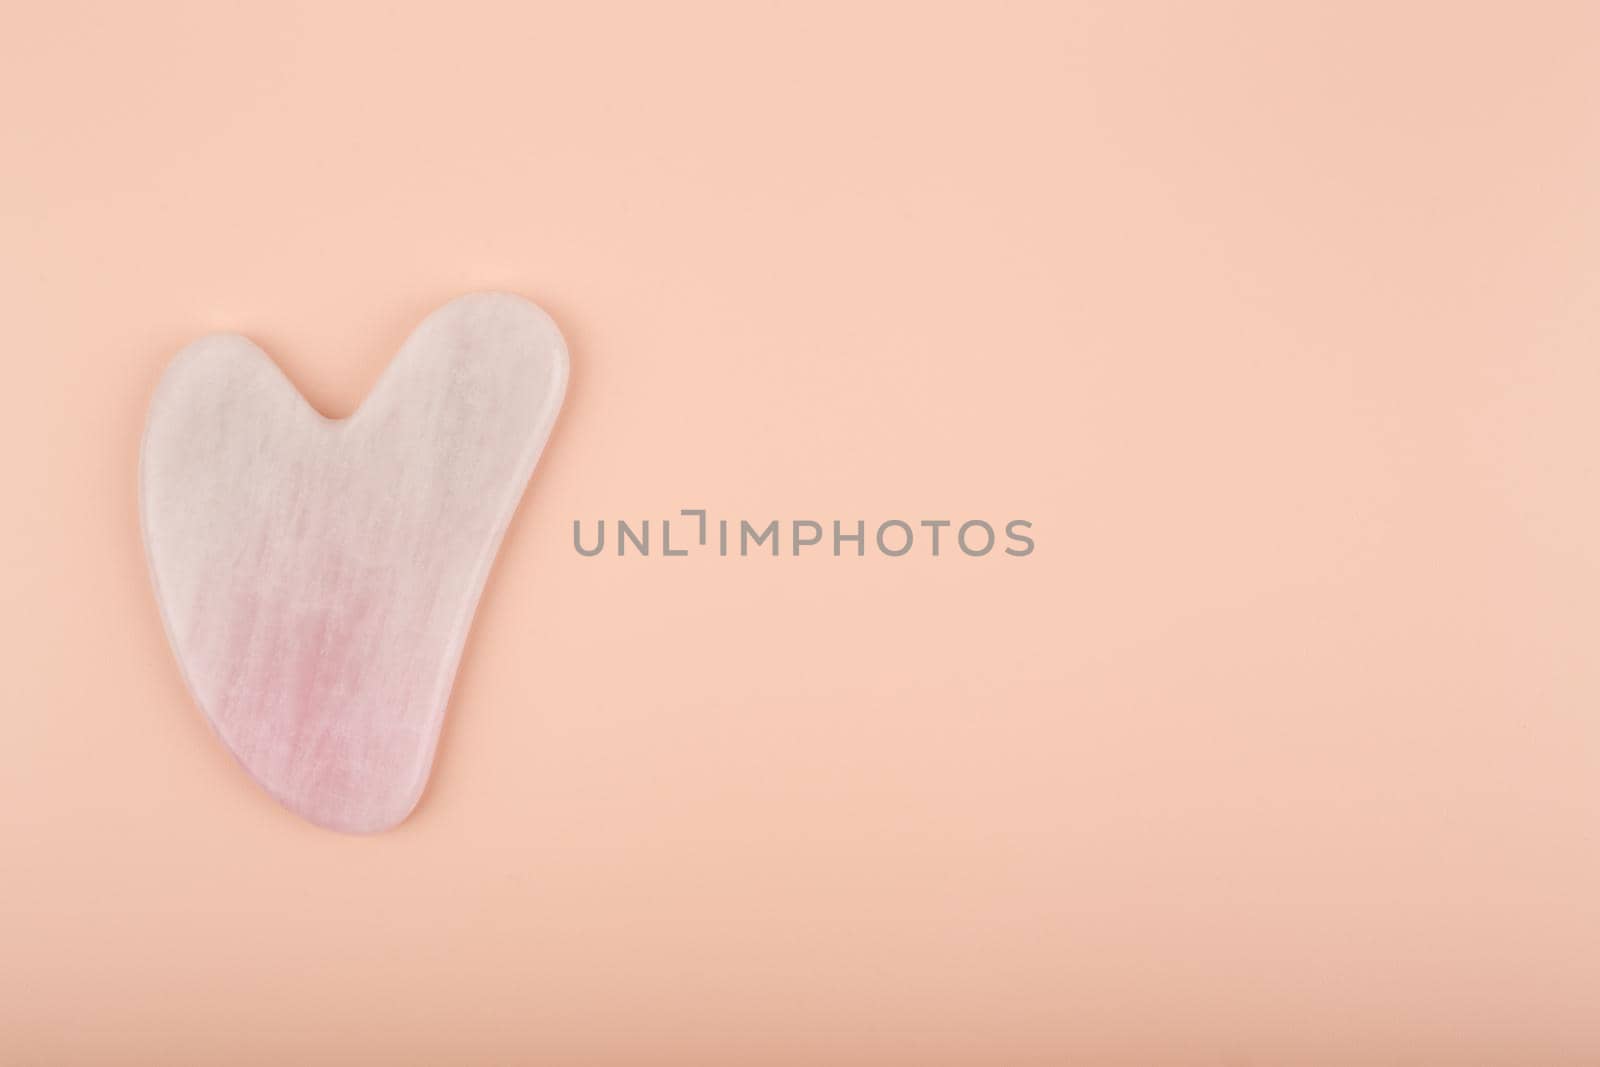 Pink heart shaped guasha stone made of quartz crystal on bright beige background by Senorina_Irina